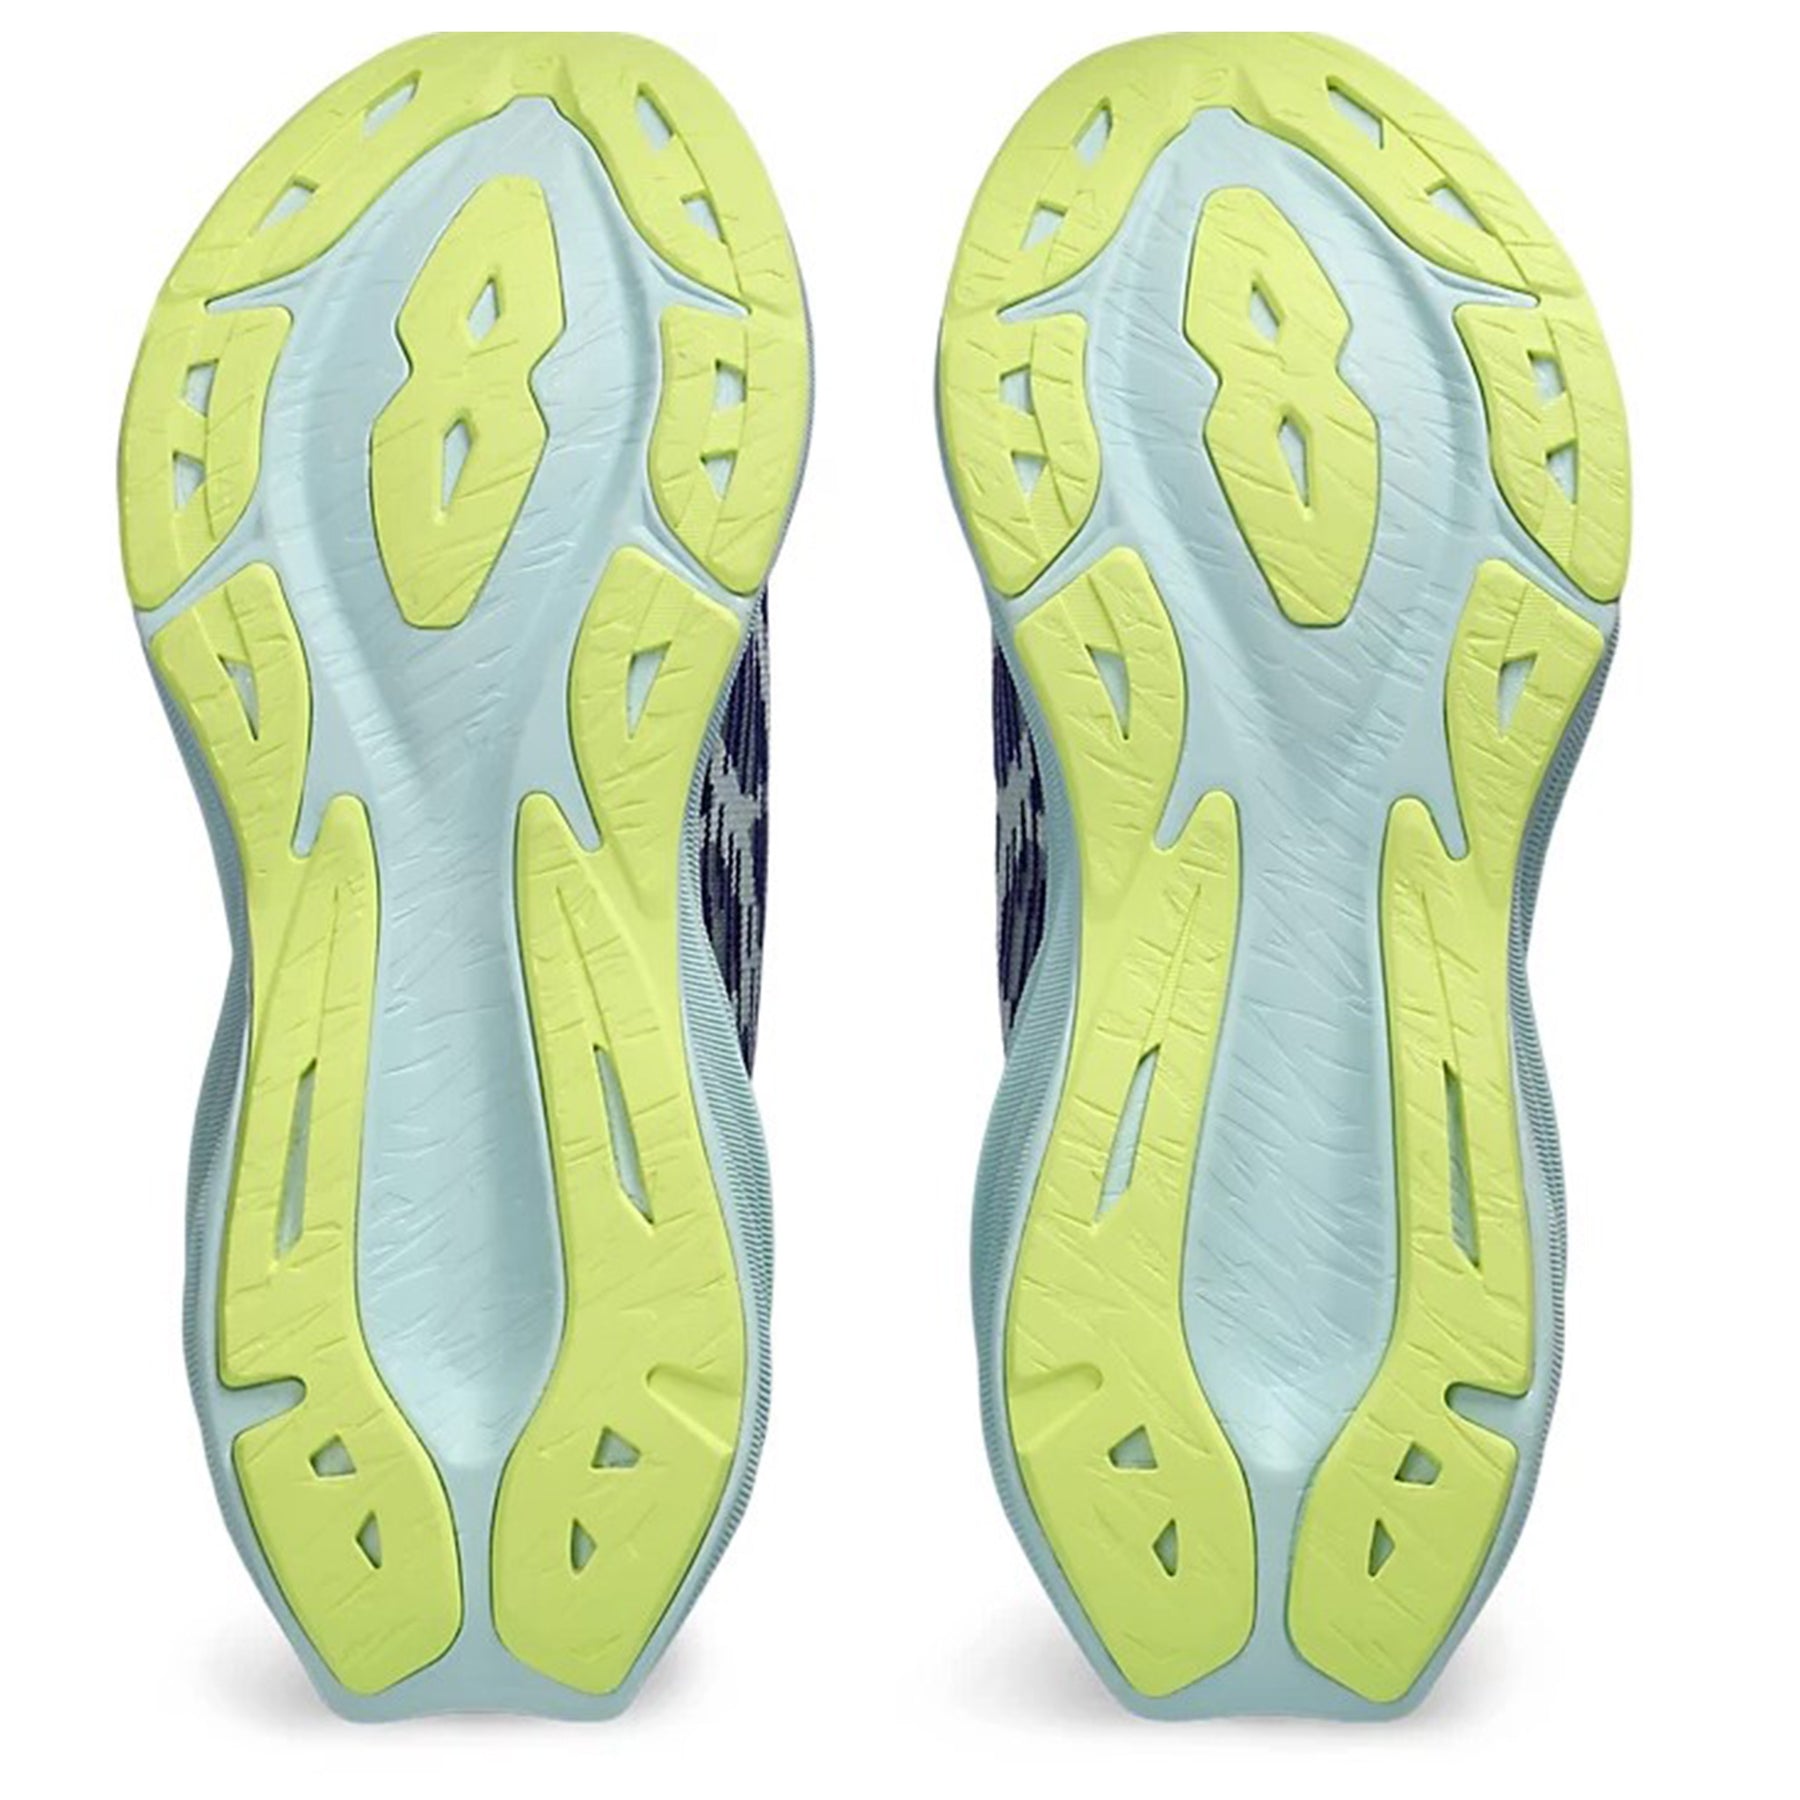 Asics Novablast 3 Womens Running Shoes: Eggplant/Soothing Sea